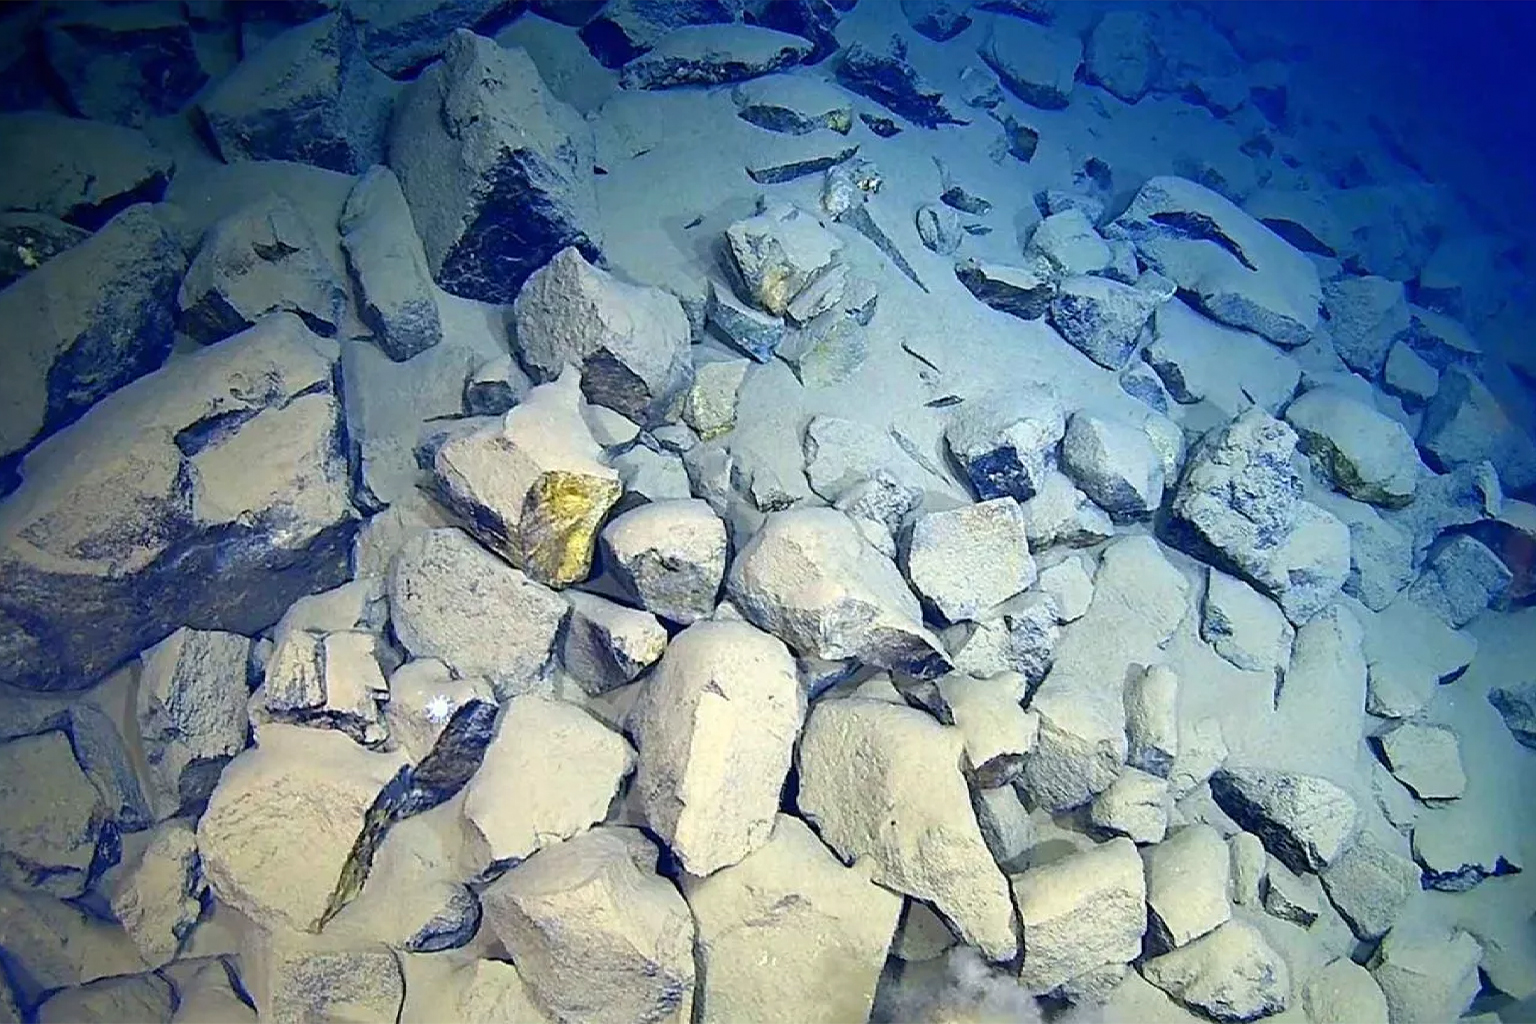 The subduction collison zone, which Wright calls “Flintstones quarry.”